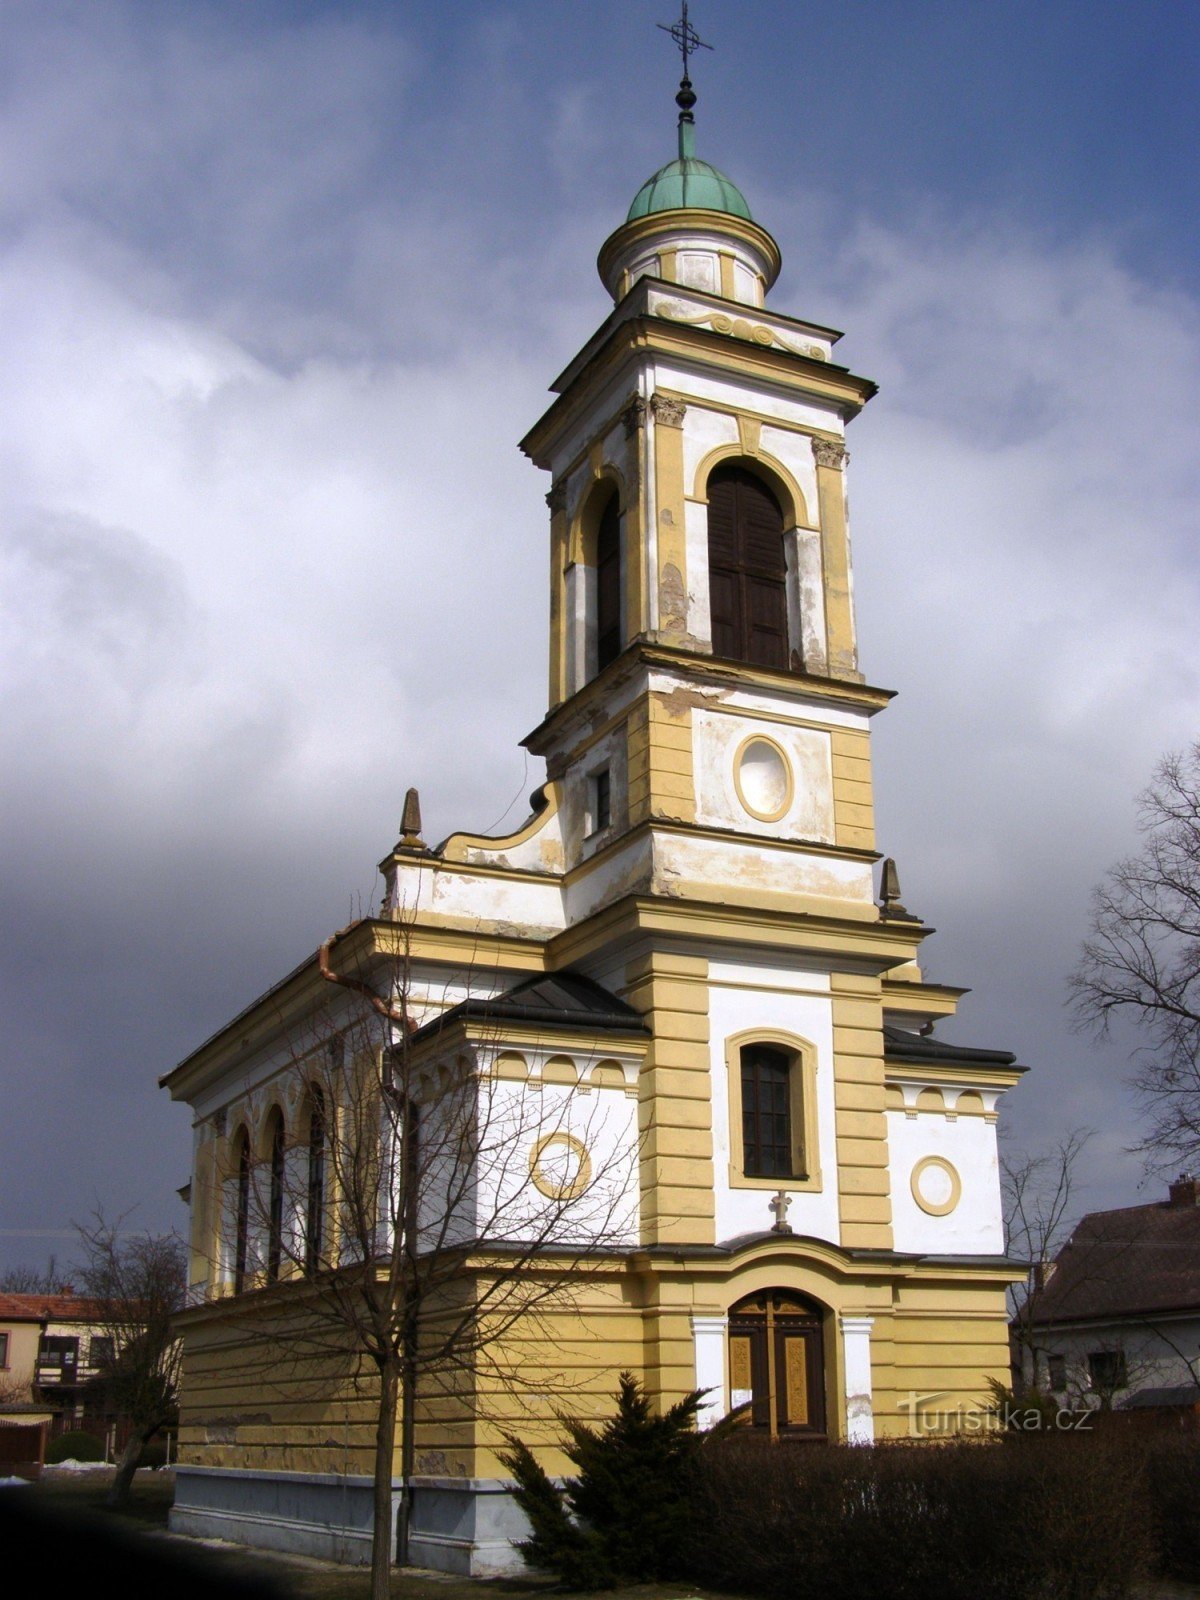 Lhota pod Libčany - Pyhän Kolminaisuuden kappeli